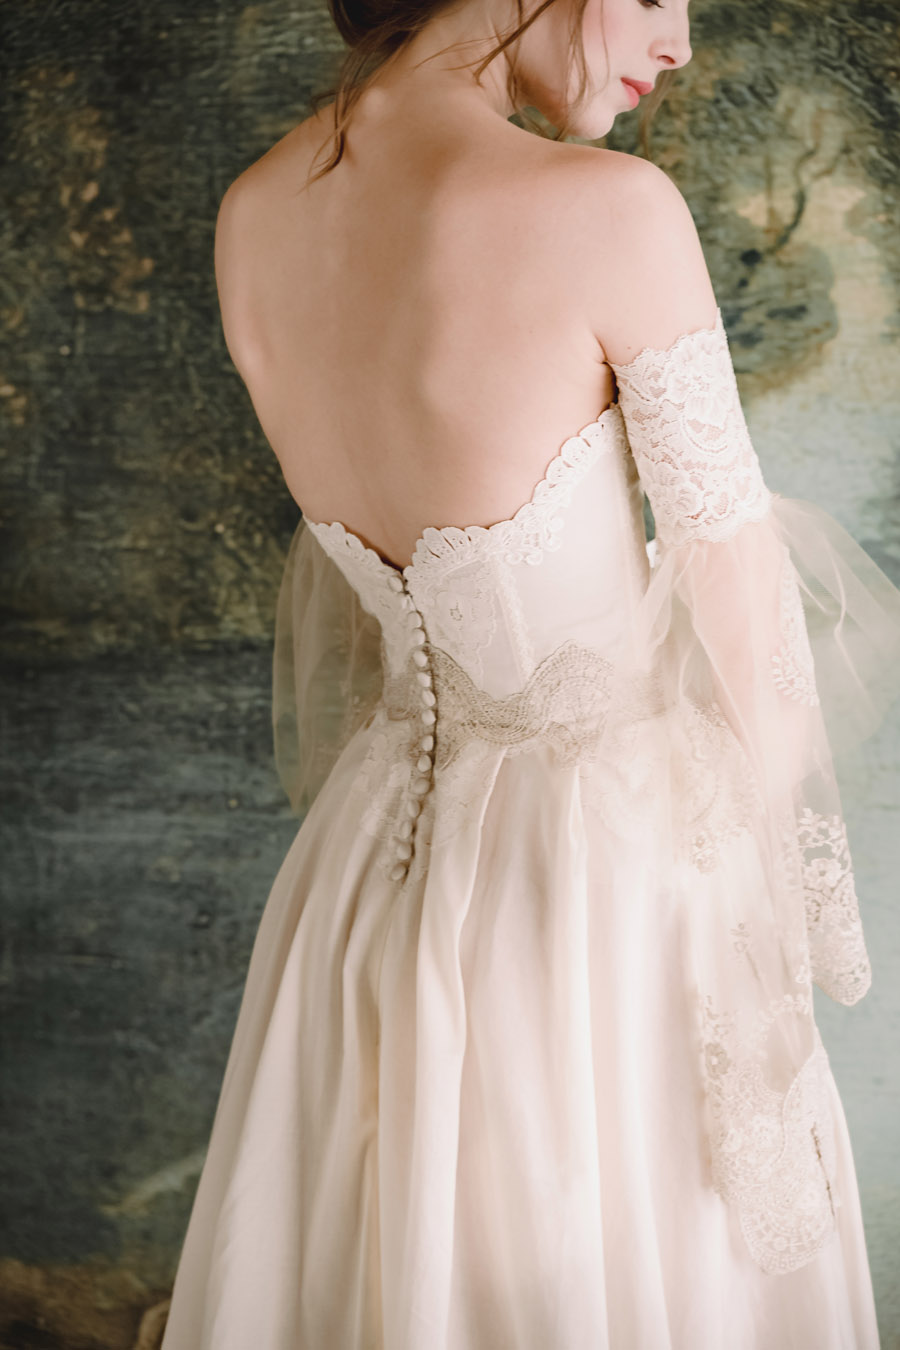 Claire Pettibone 2020 wedding dress ideas (9)